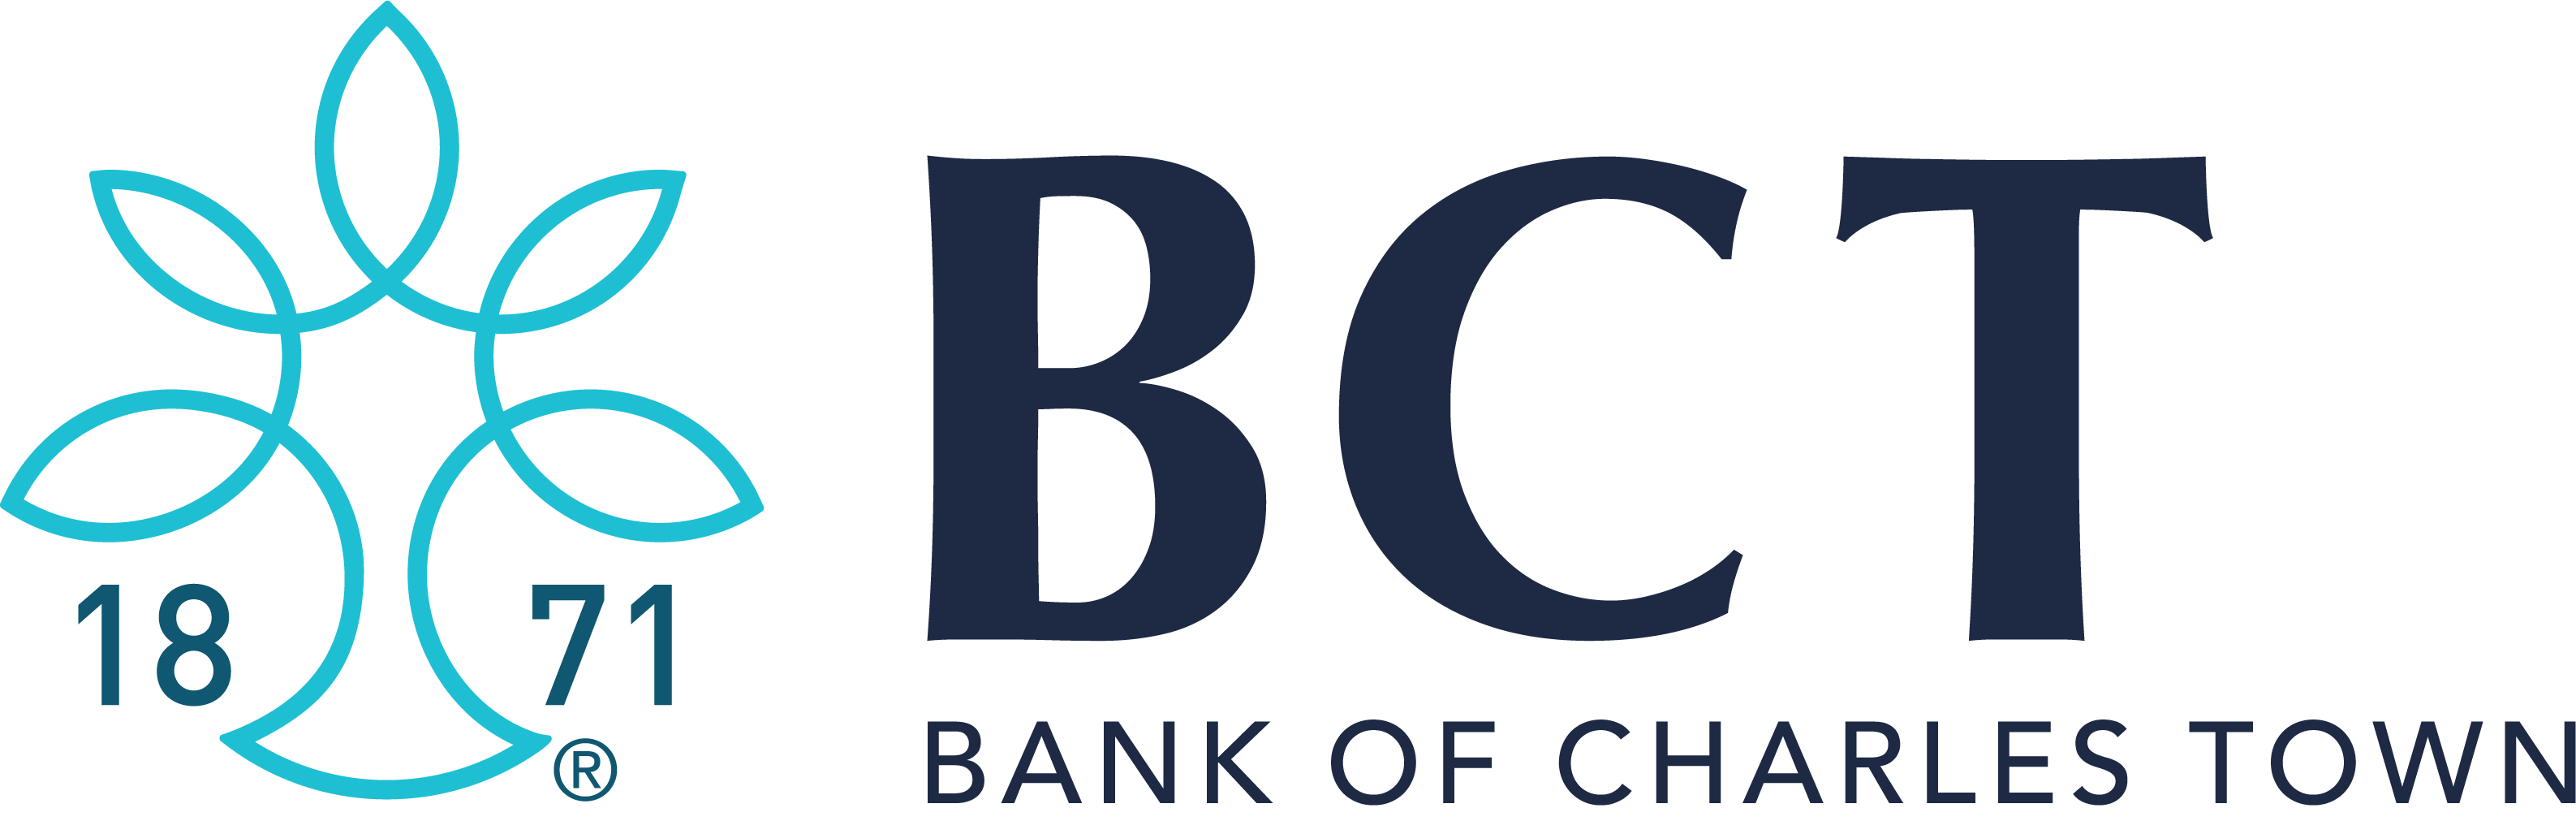 BCT_Logo_BankofCharlesTown_color_trademark